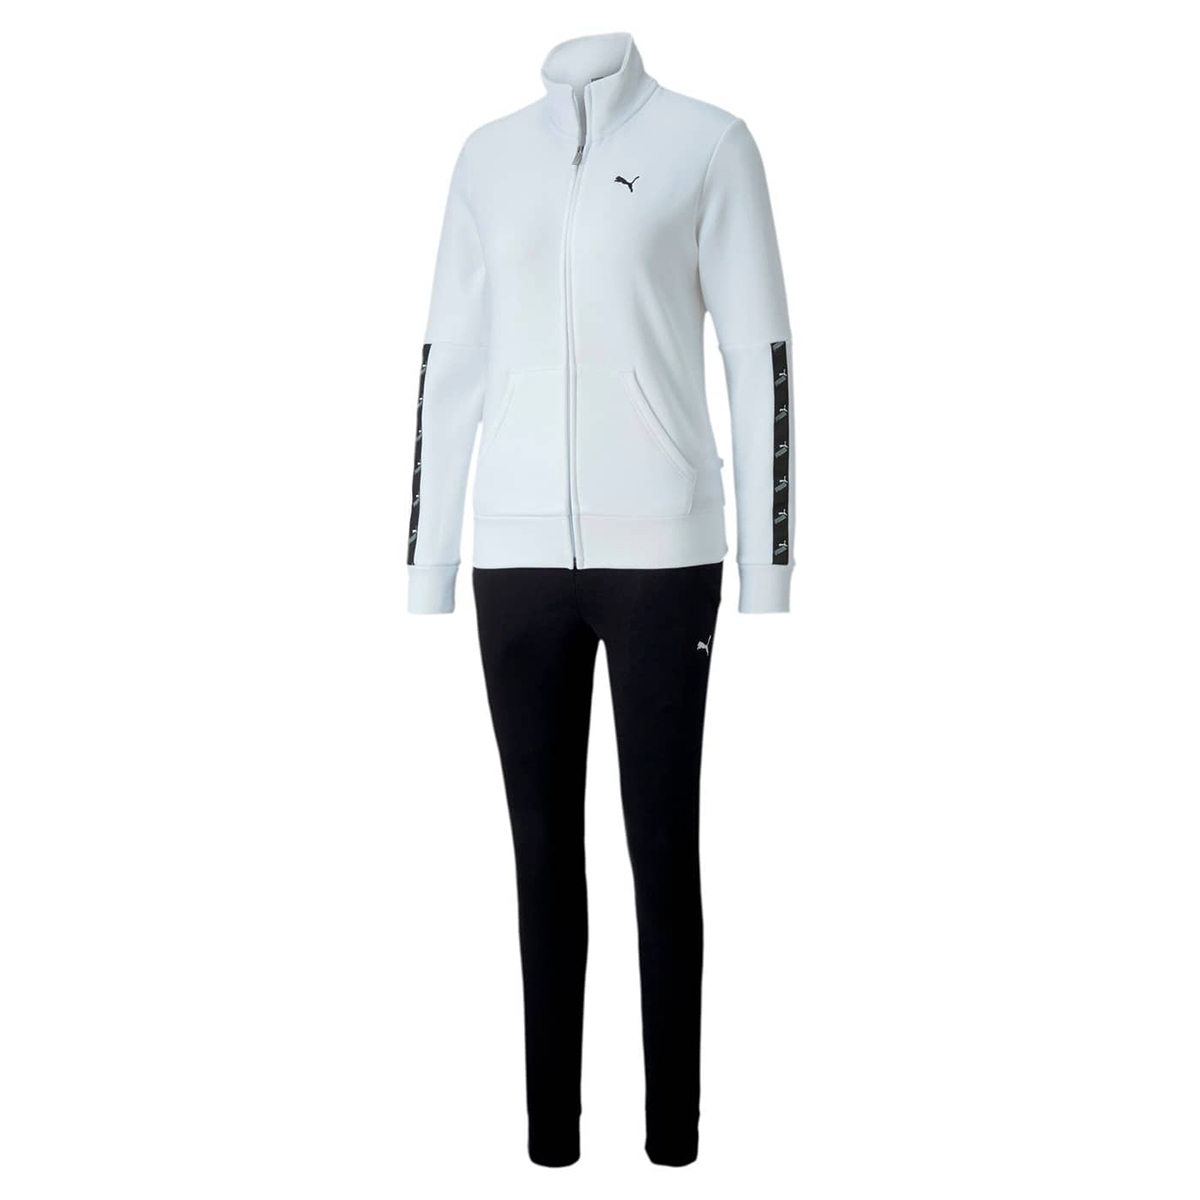 PUMA Damen Amplified Sweat Suit CL Trainingsanzug Jogginganzug 583658 Weiß